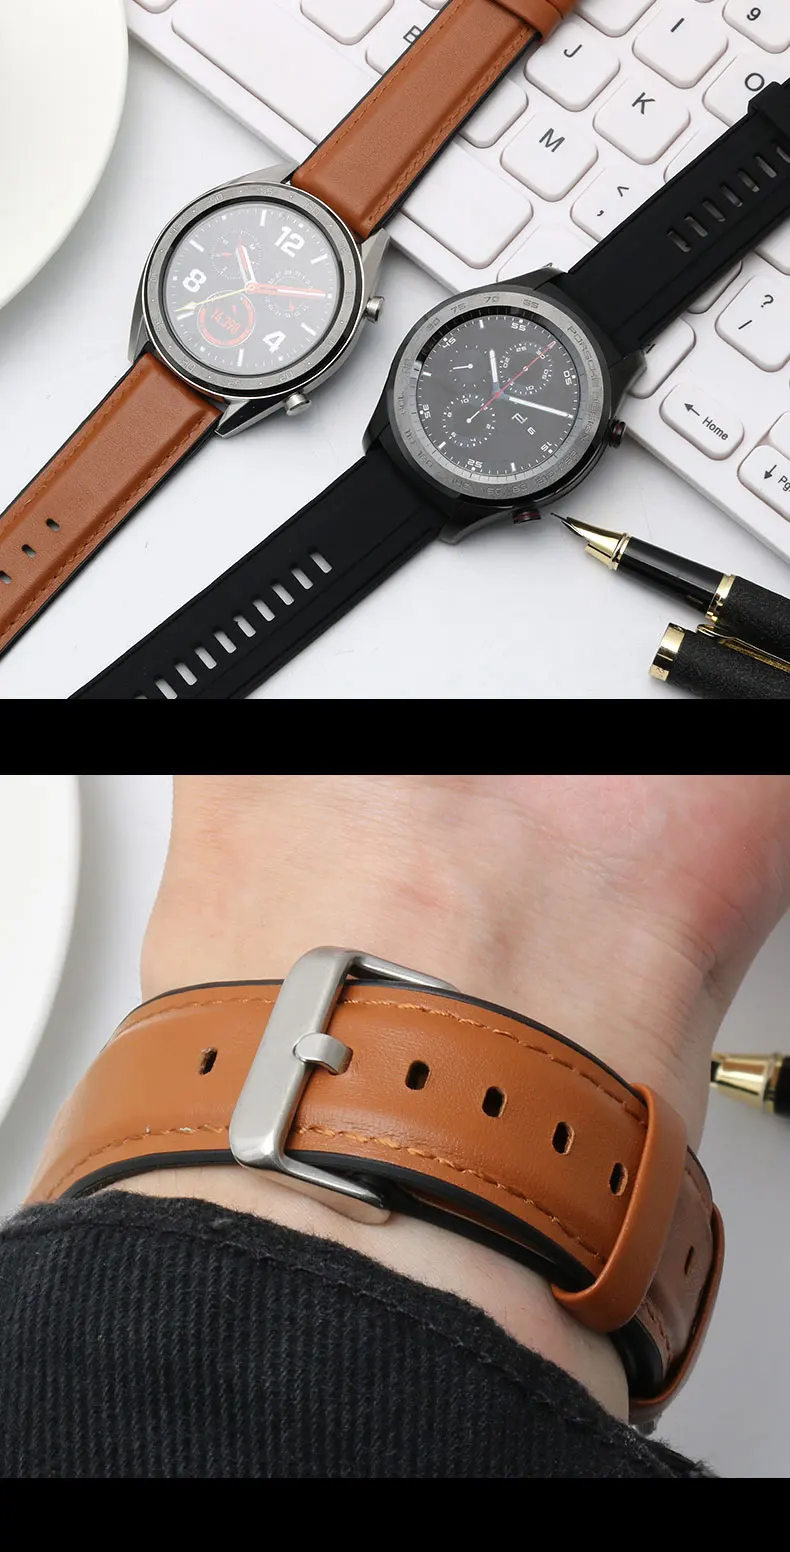 Huawei Watch GT 2 ремешок для samsung galaxy watch 46 мм S3 Frontier ремешок 22 мм Amazfit GTR 47 мм/stratos/pace кожаный браслет